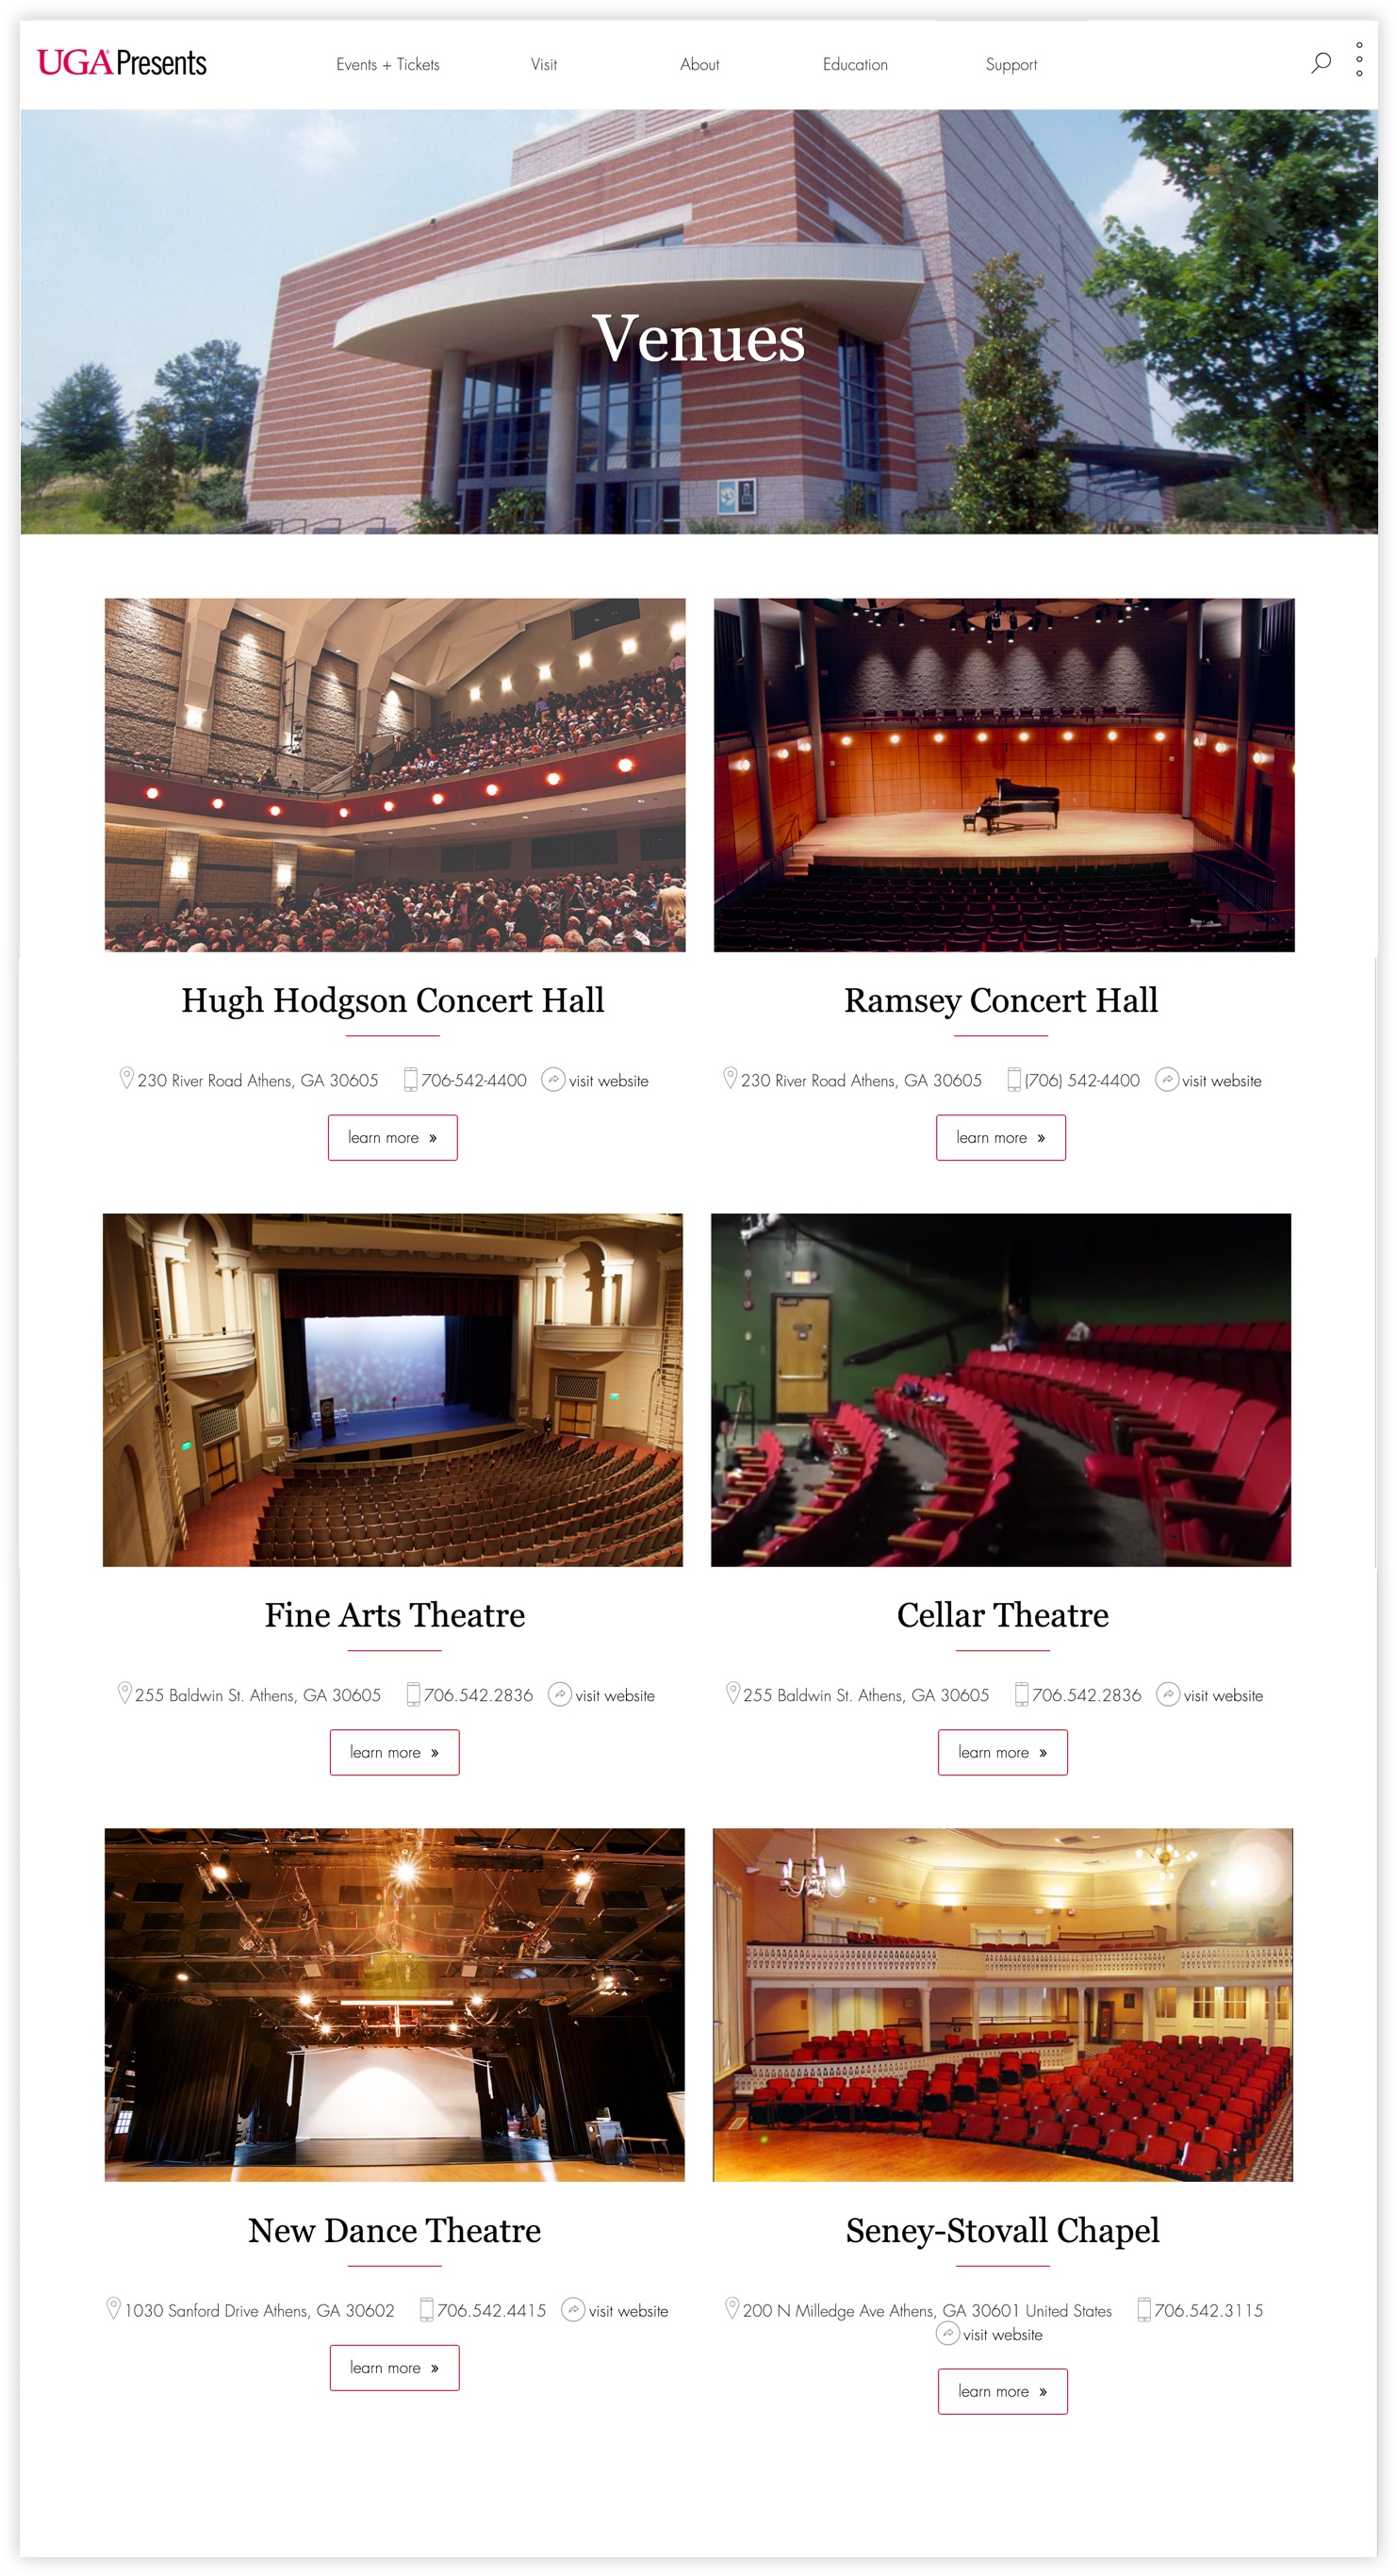 UGA Performing Arts Center venues